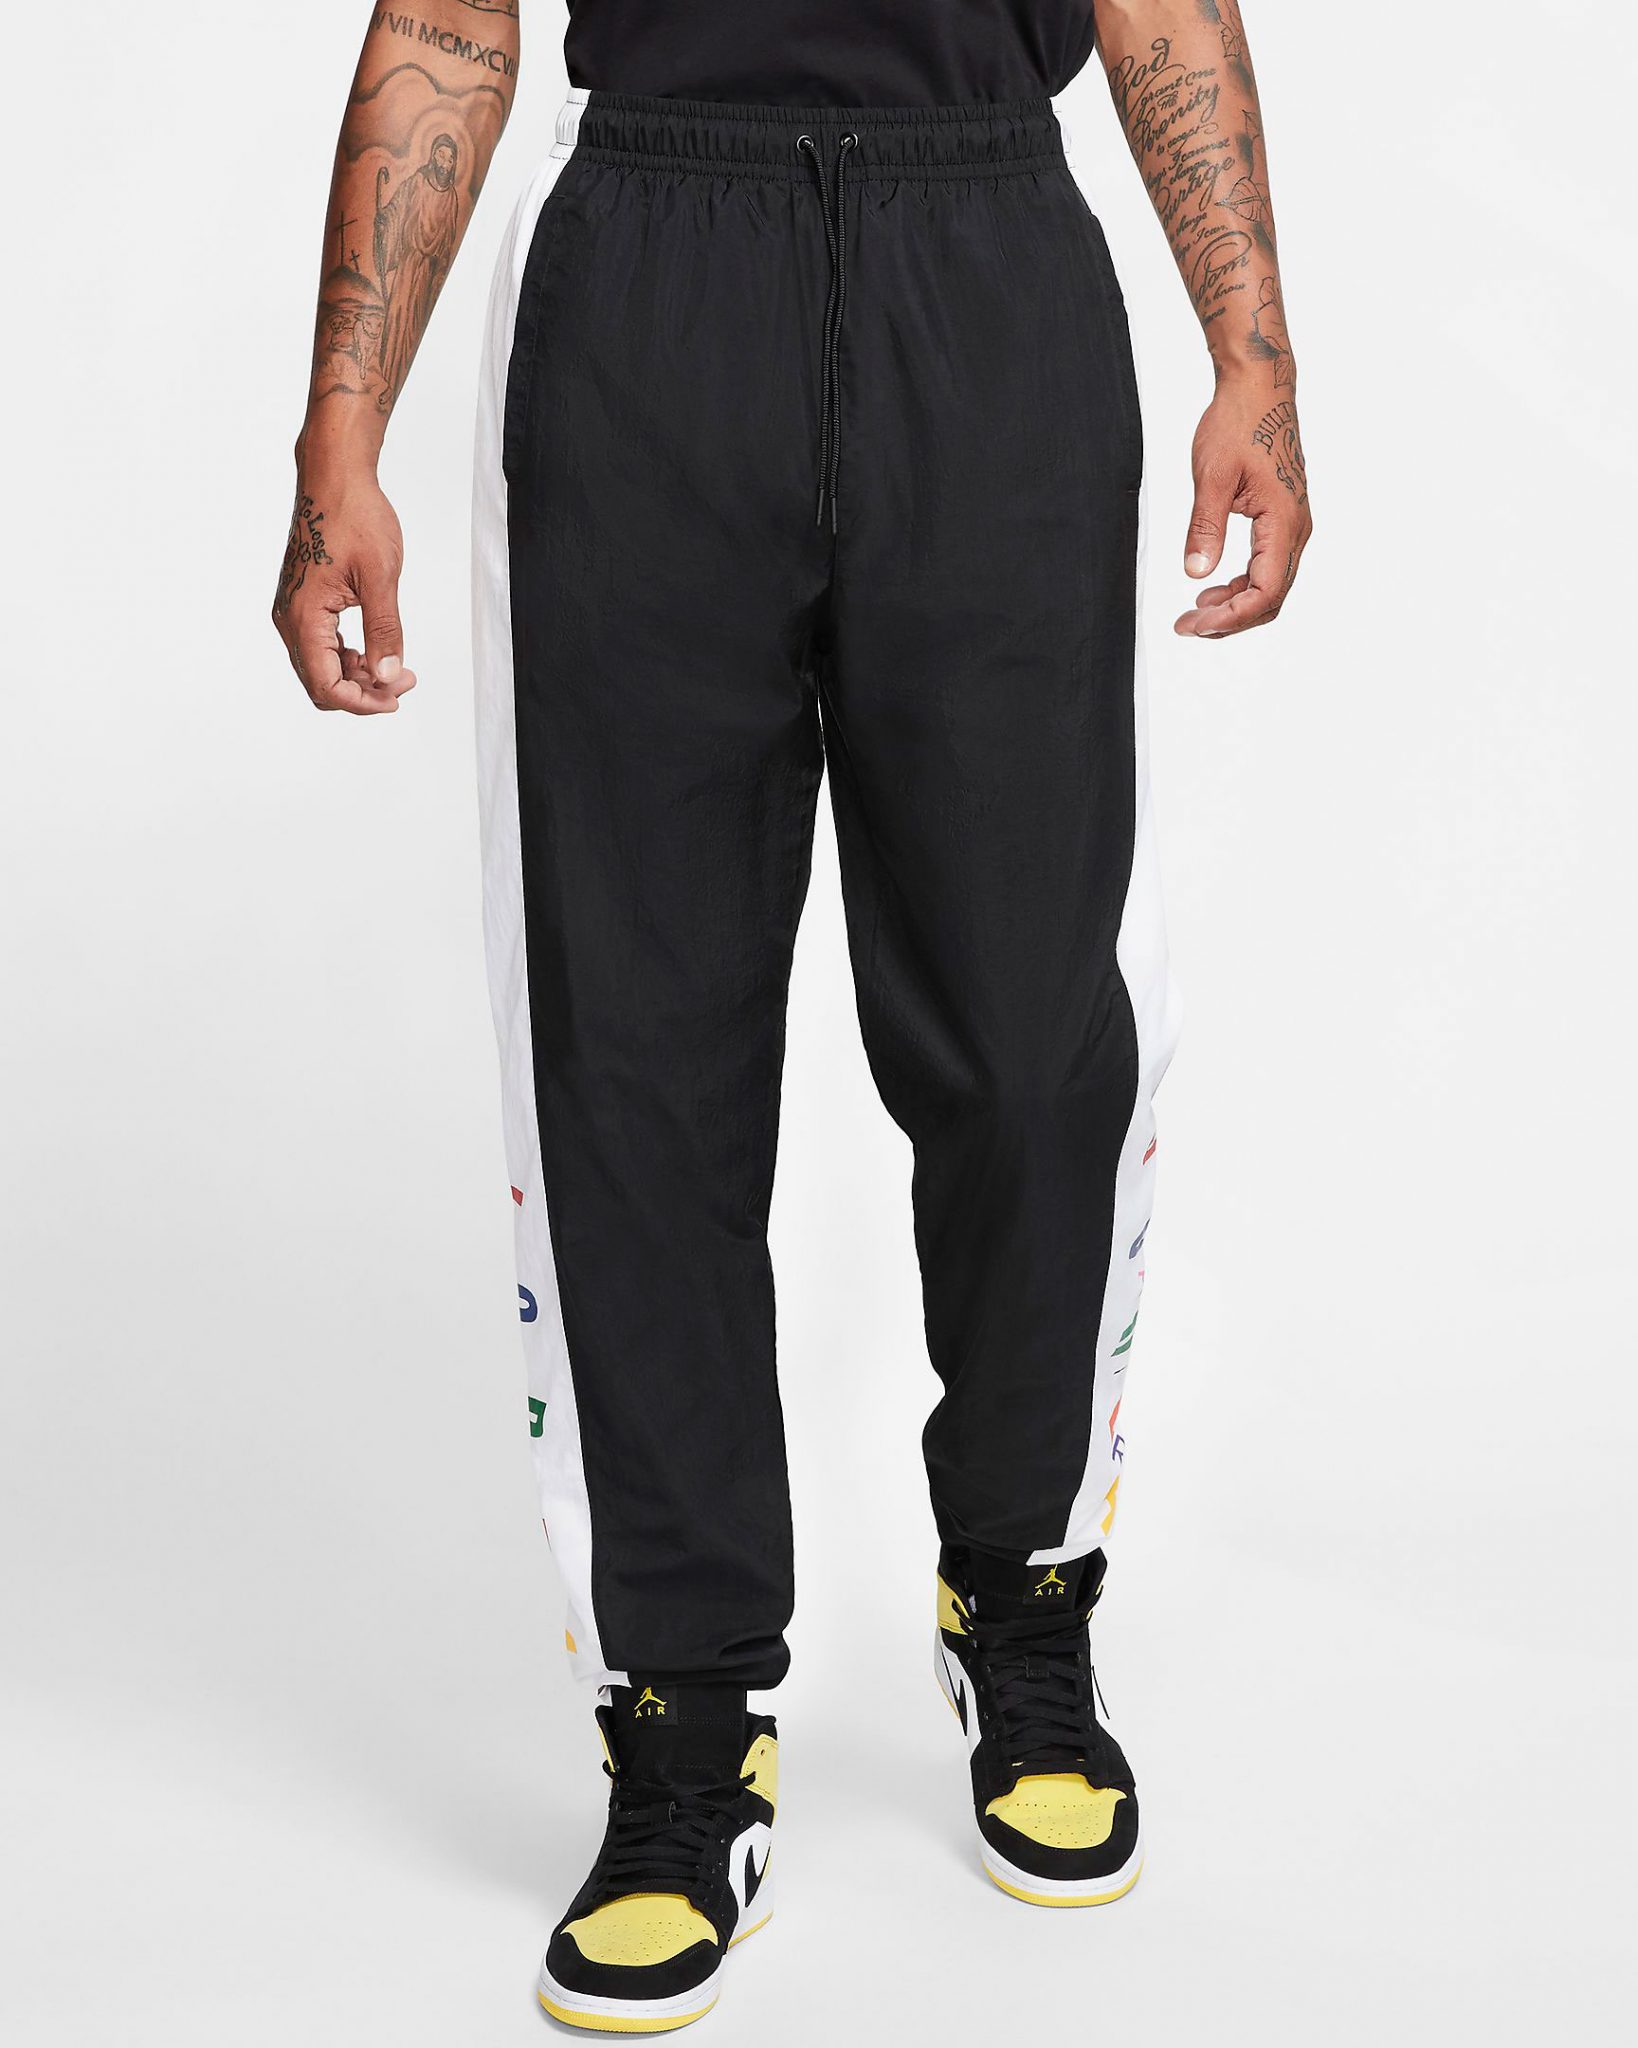 Jordan 4 Black Cat 2020 Sneaker Outfits | SneakerFits.com